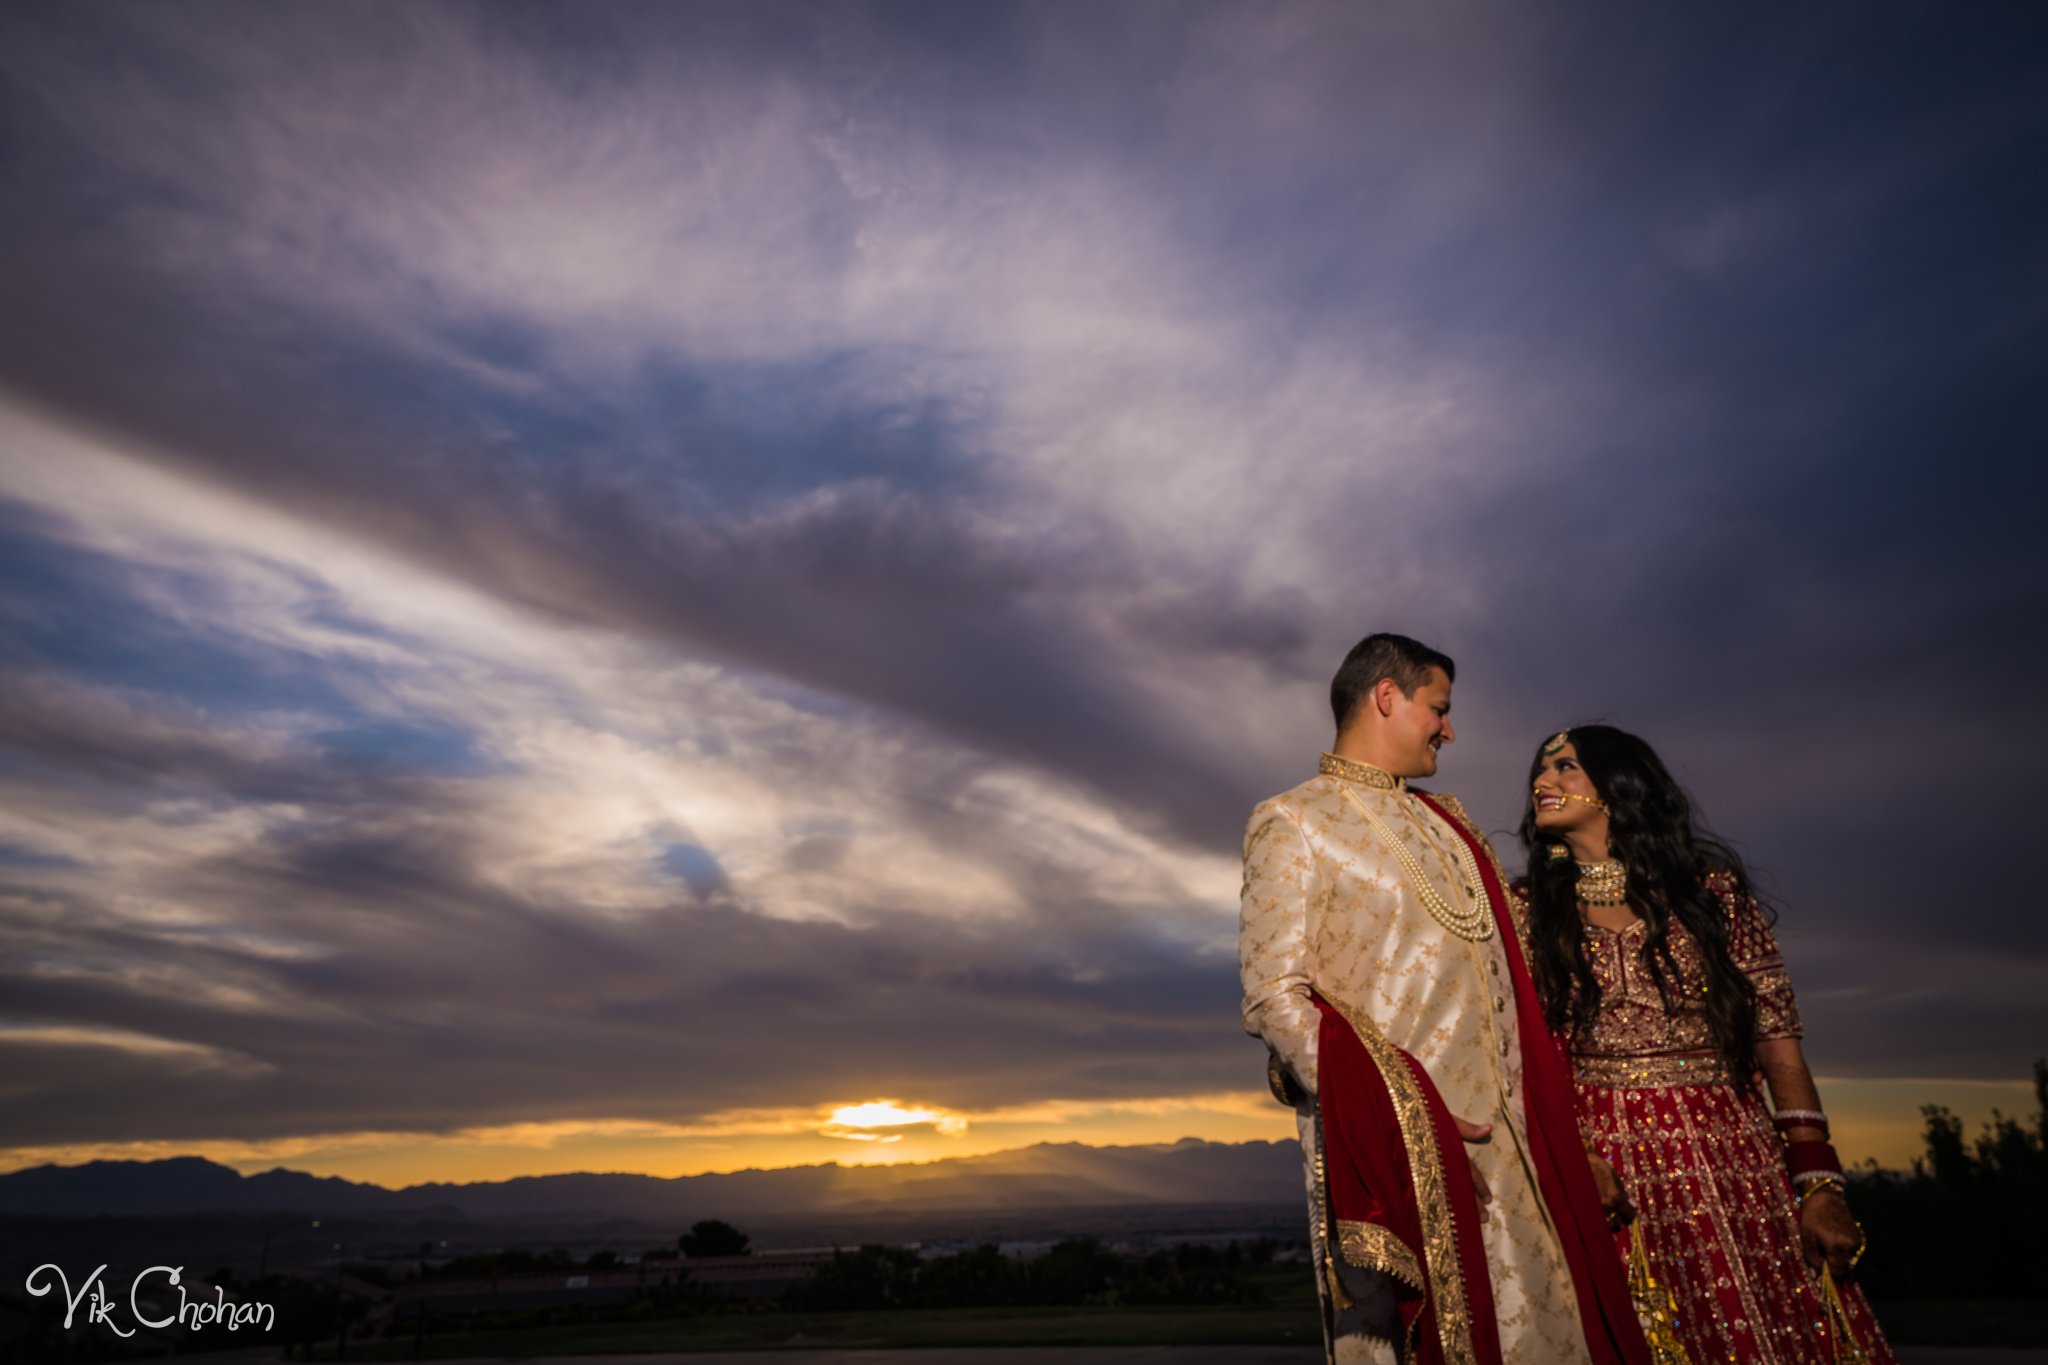 2022-06-09-Annie-&-Steven-Las-Vegas-Indian-Wedding-Ceremony-Photography-Vik-Chohan-Photography-Photo-Booth-Social-Media-VCP-267.jpg